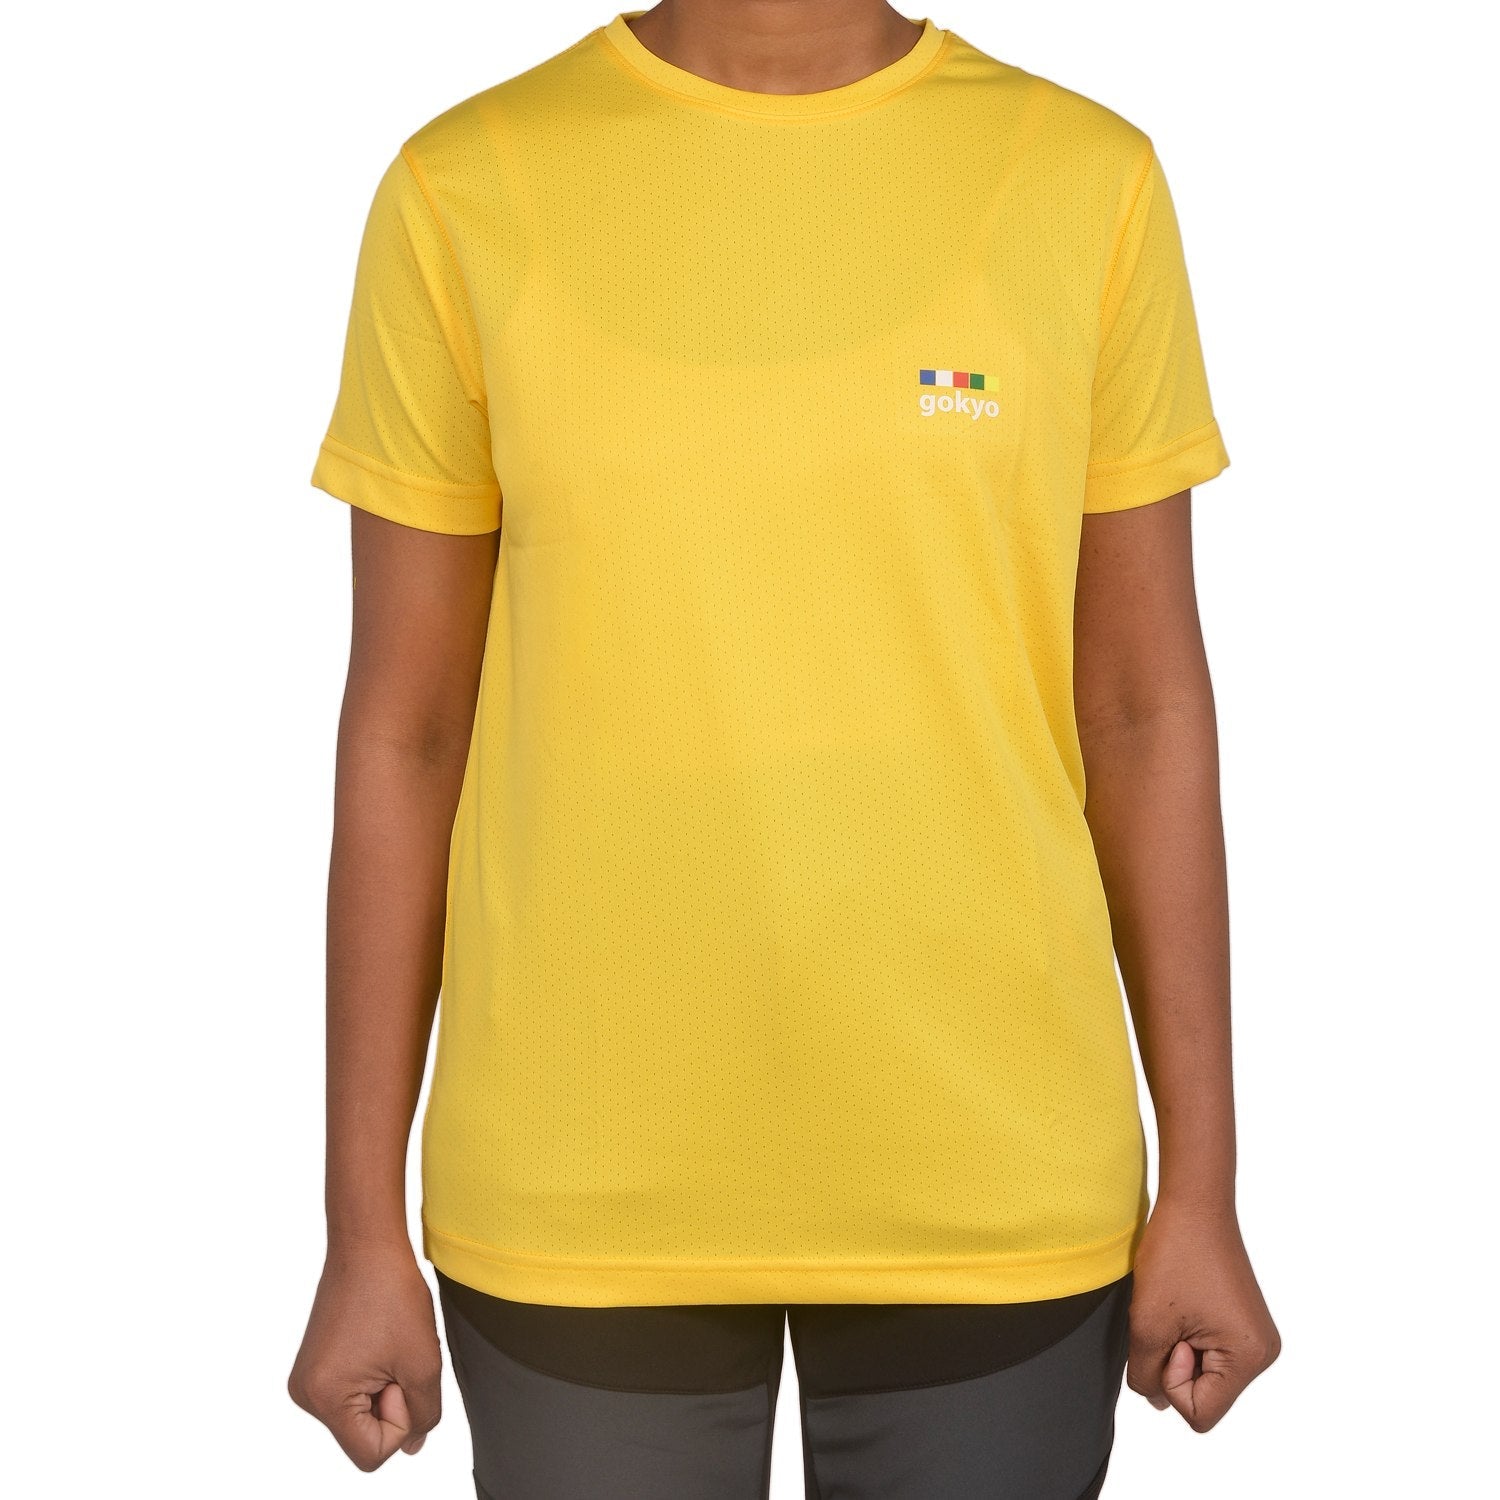 Buy Kalimpong Activewear DryFit Tshirt - Women Lemon Yellow at Gokyo Outdoor Clothing & Gear